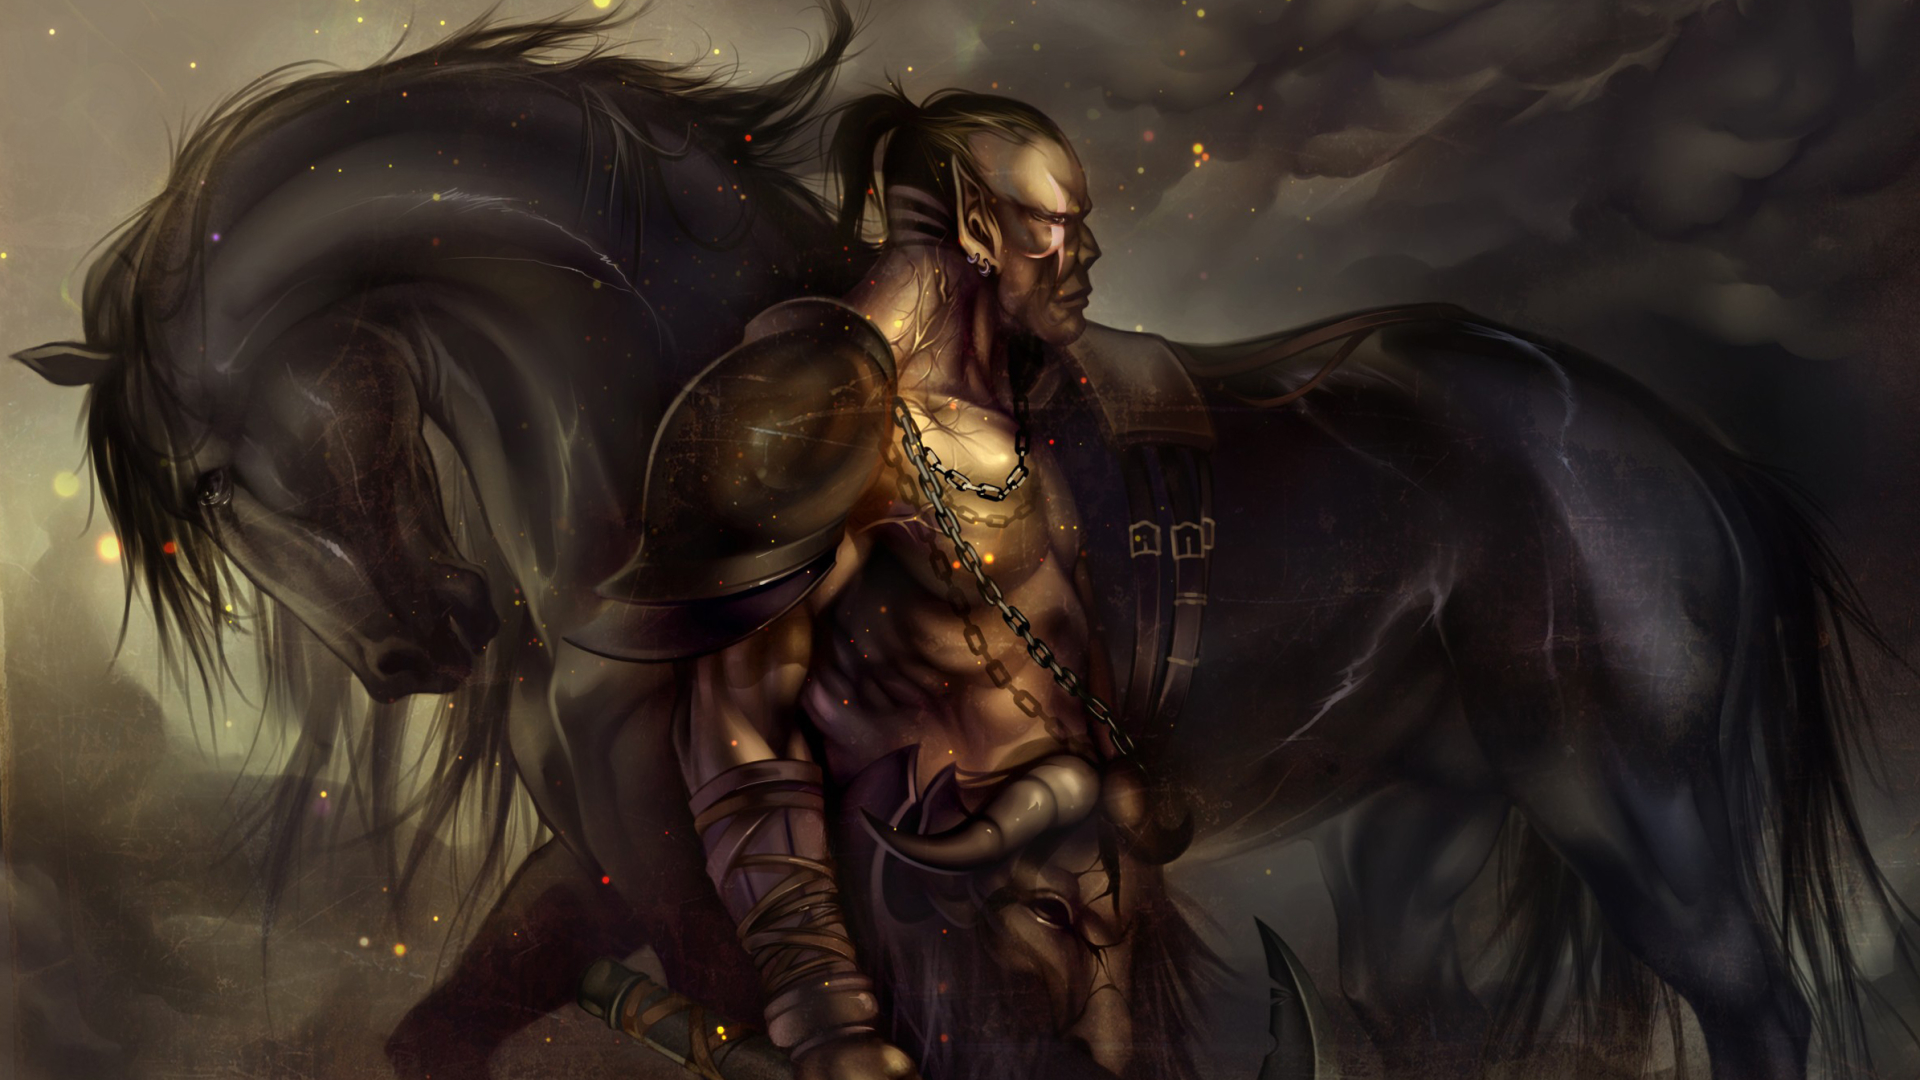 Wallpaper Horse and warrior, fantasy, art